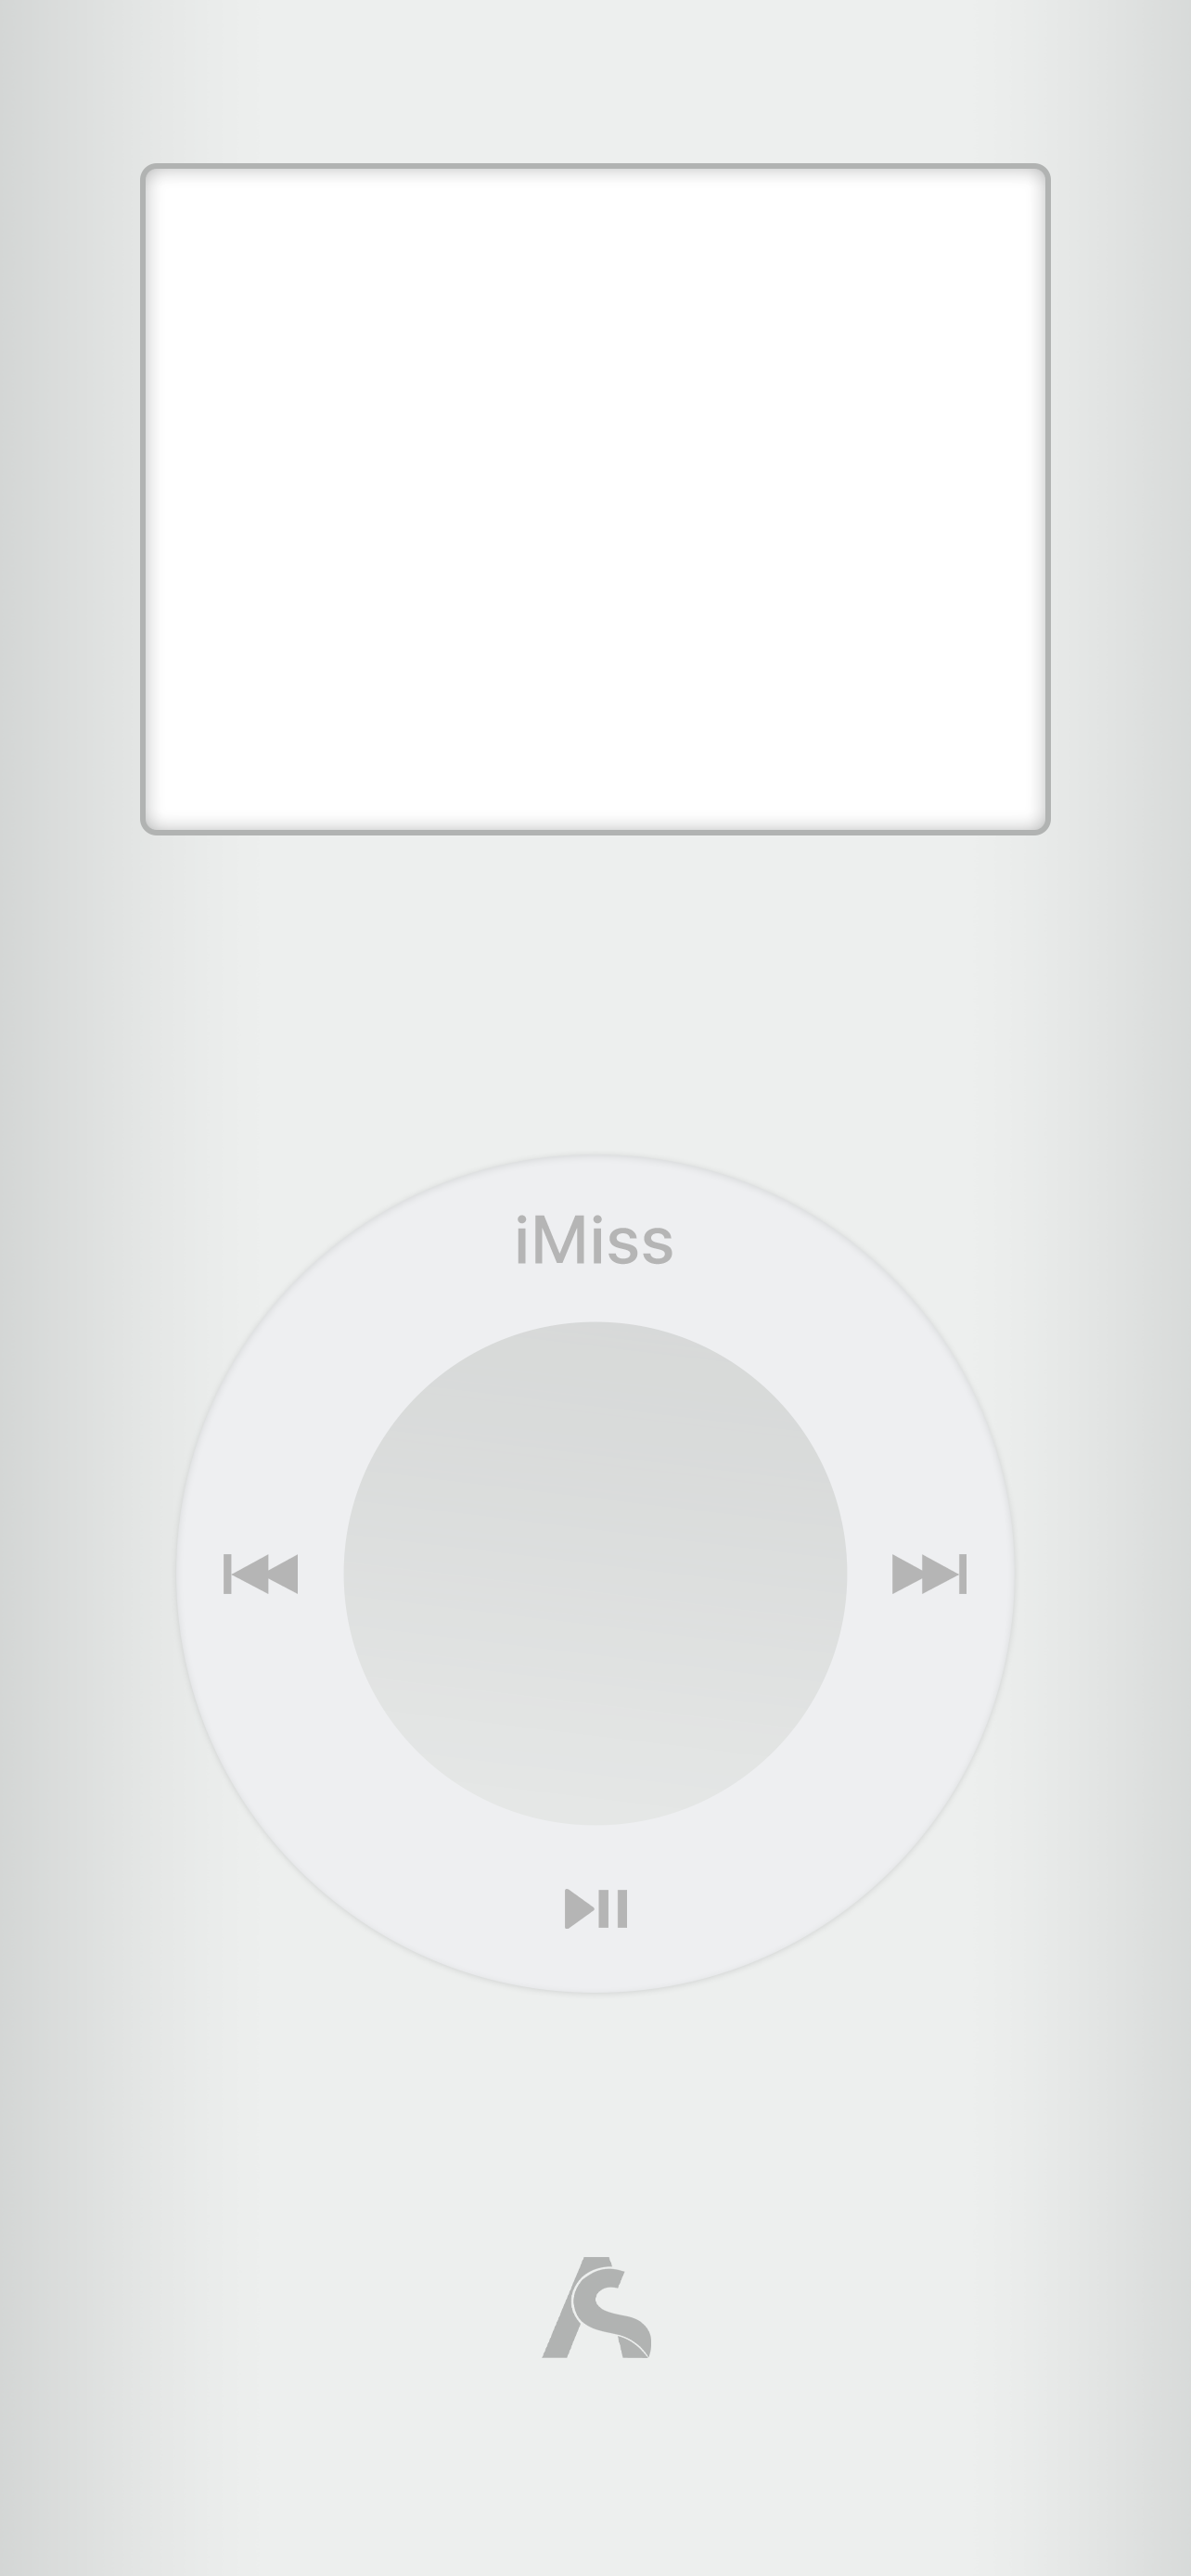 iMiss iPod (White)